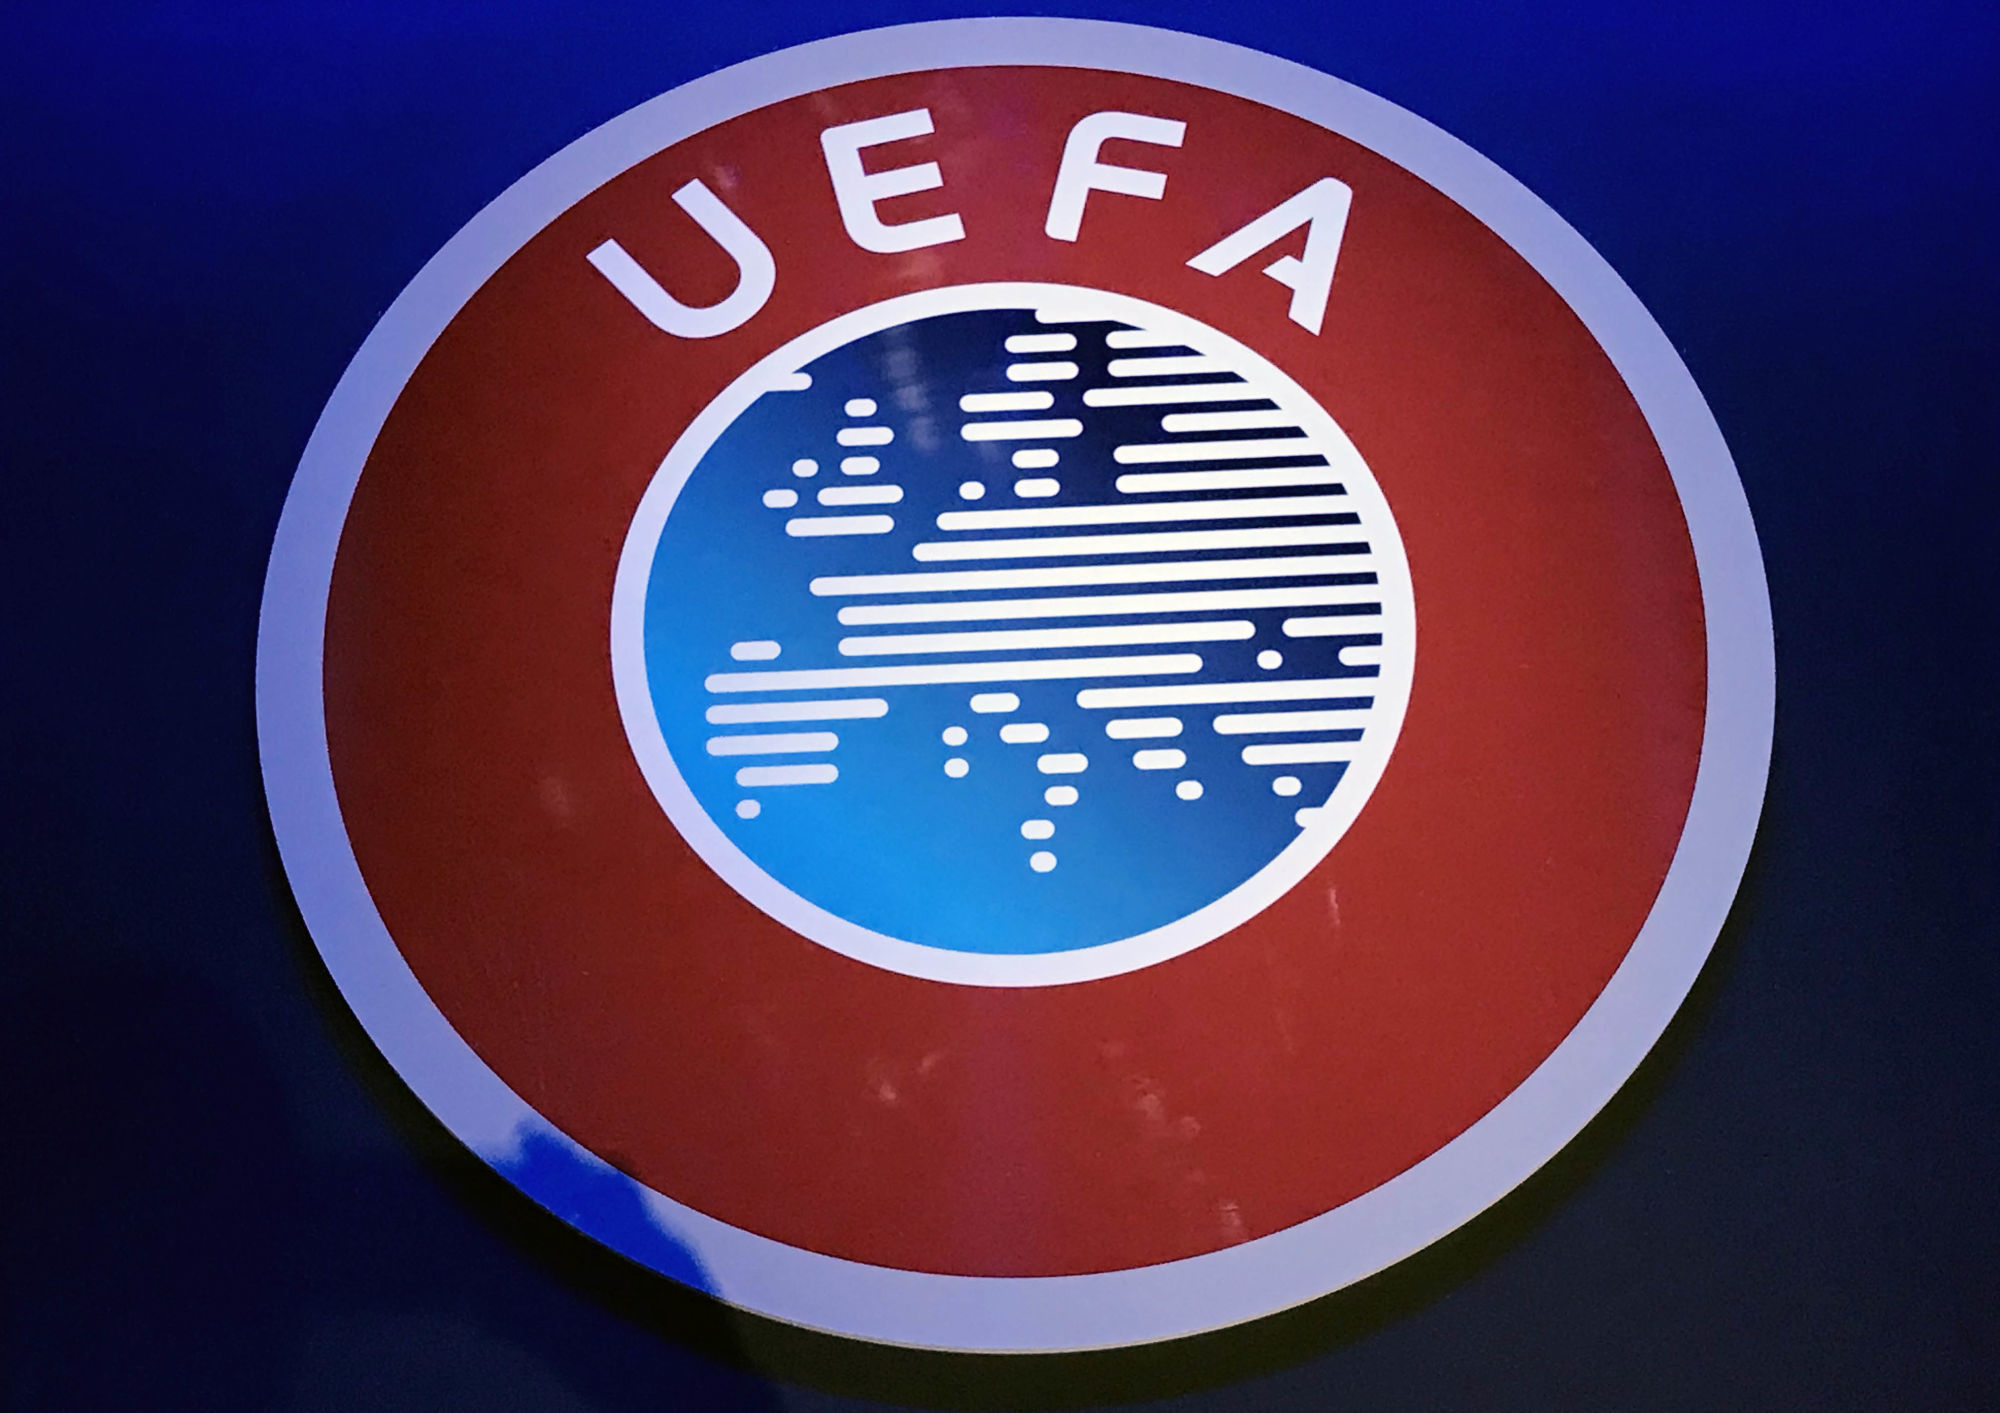 UEFA LOGO
Photo by Icon Sport